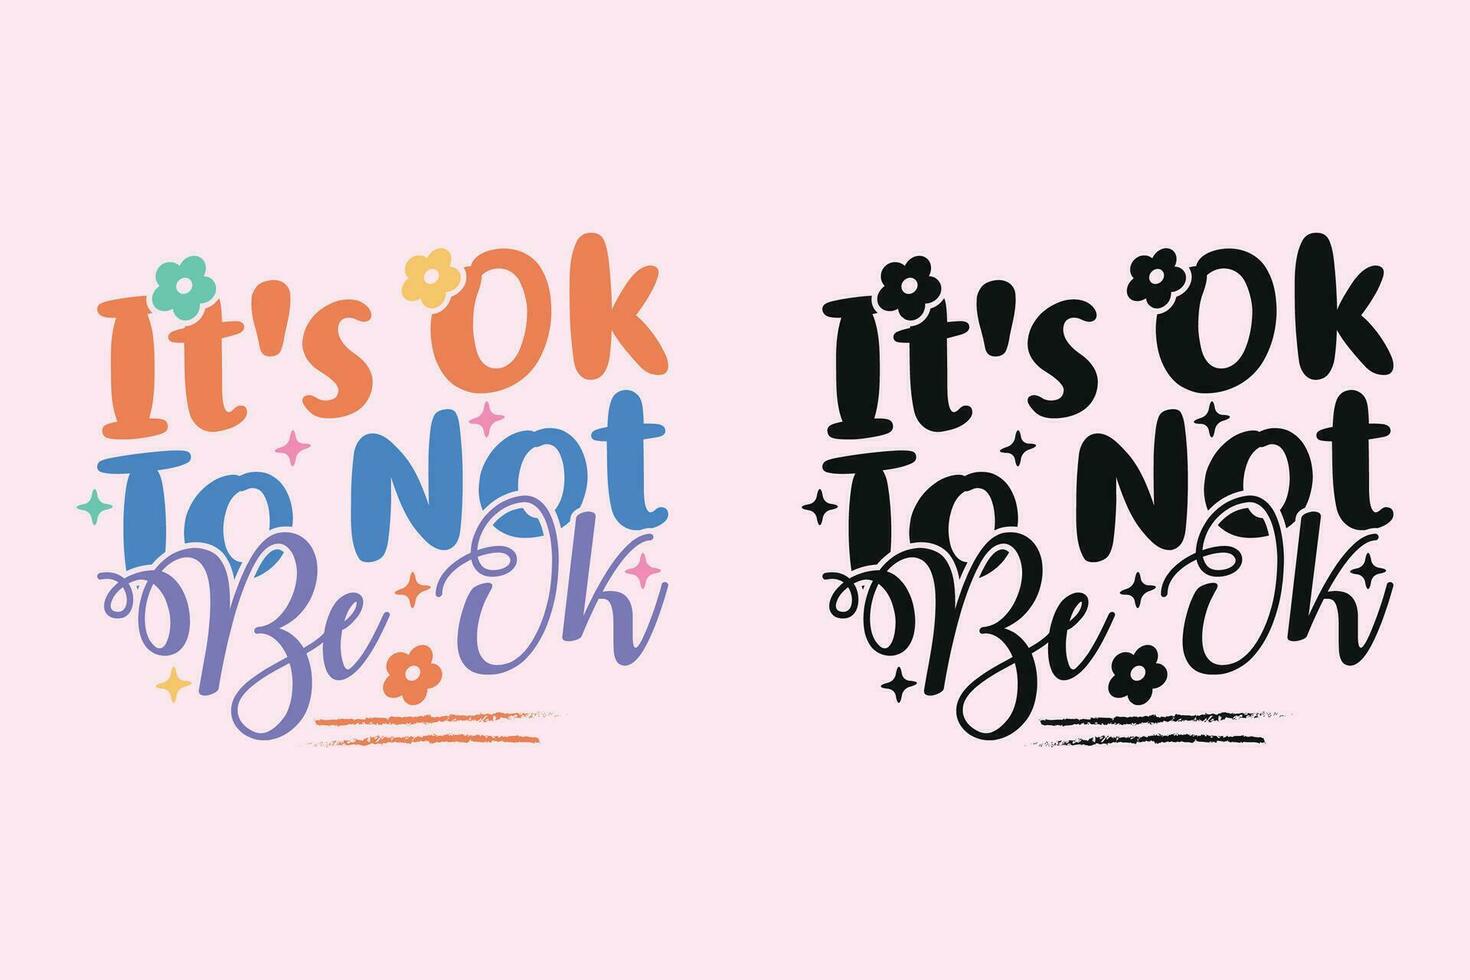 It's Ok To Not Be Ok groovy style inspirational design, Motivational retro 70s vector illustration, Positive slogan